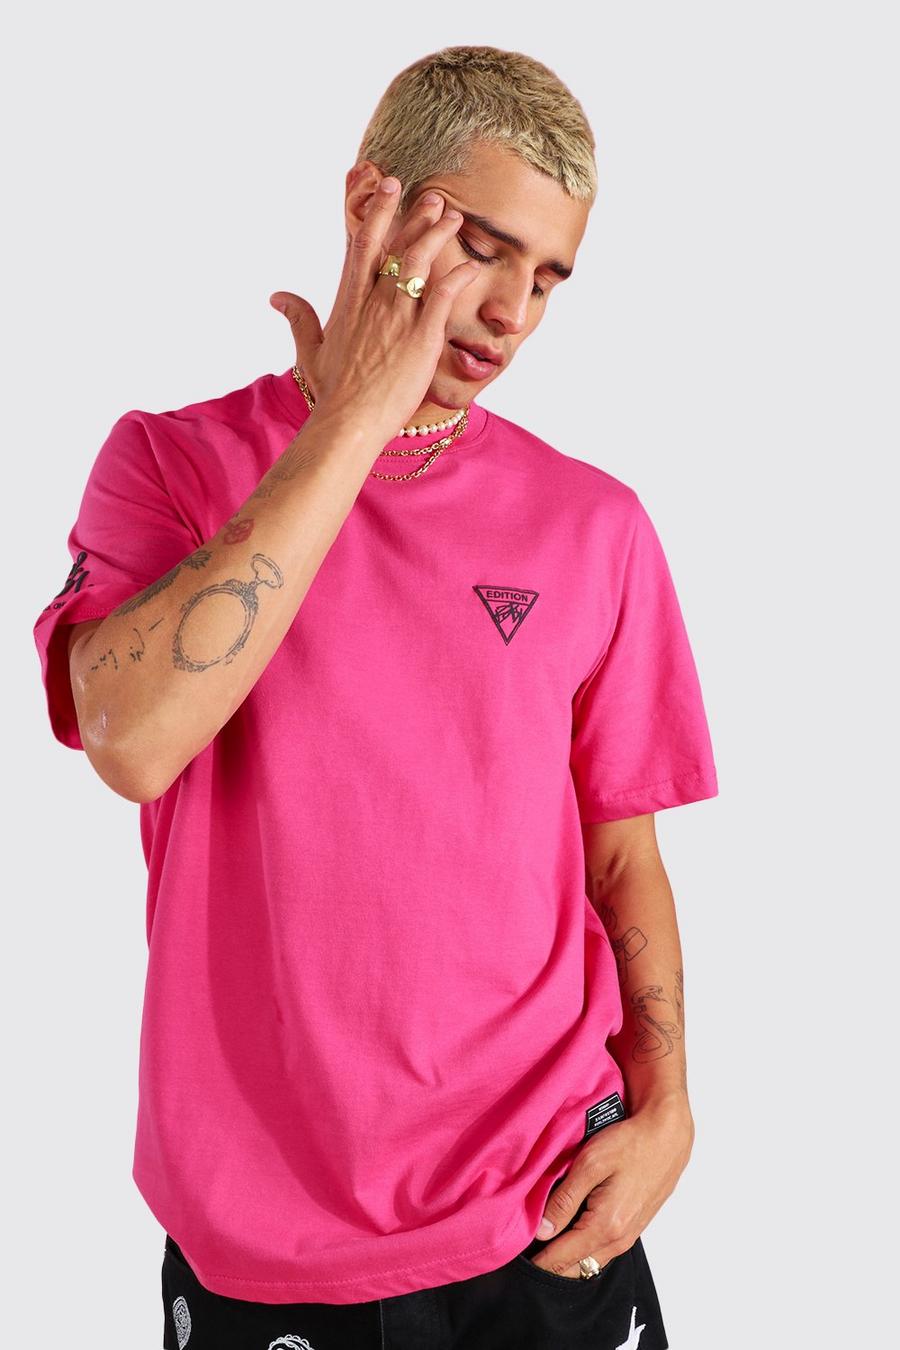 Camiseta con apliques Worldwide, Pink rosa image number 1